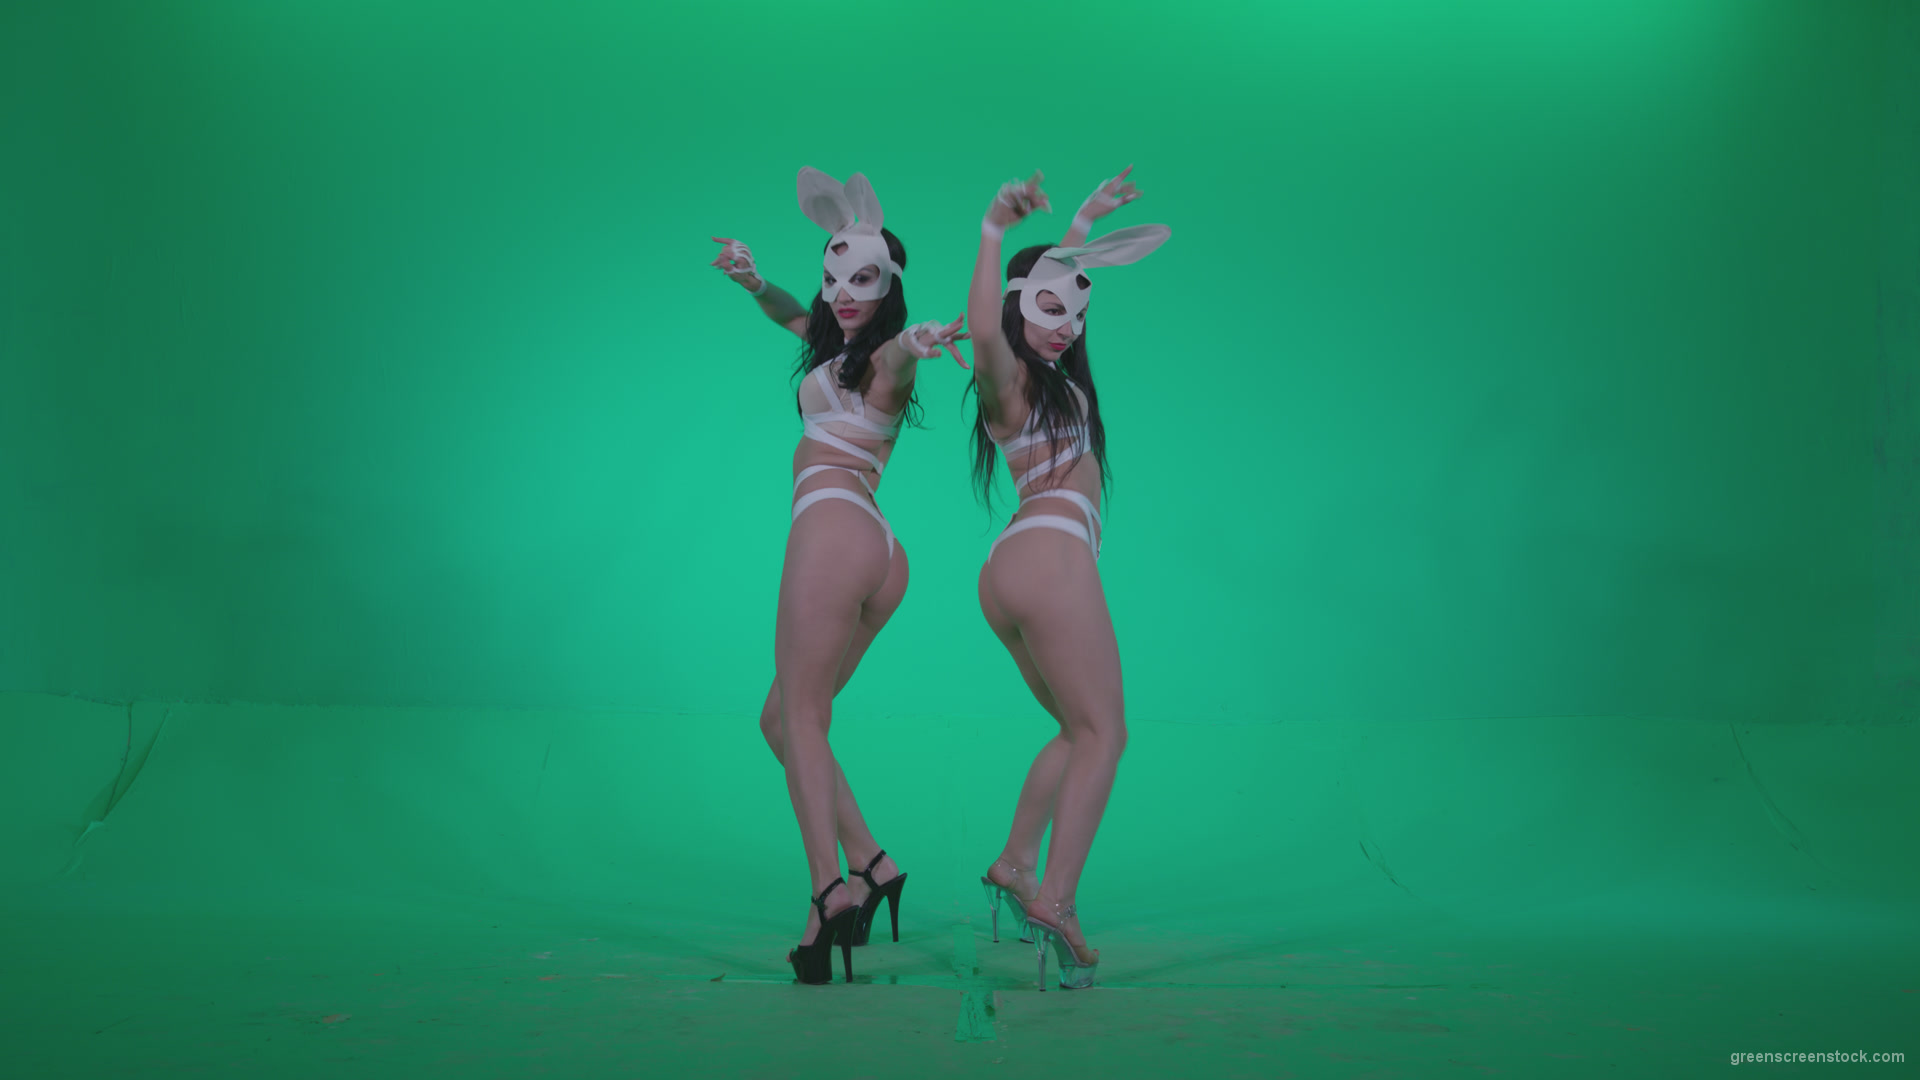 Go-go-Dancer-White-Rabbit-m5-Green-Screen-Video-Footage_004 Green Screen Stock